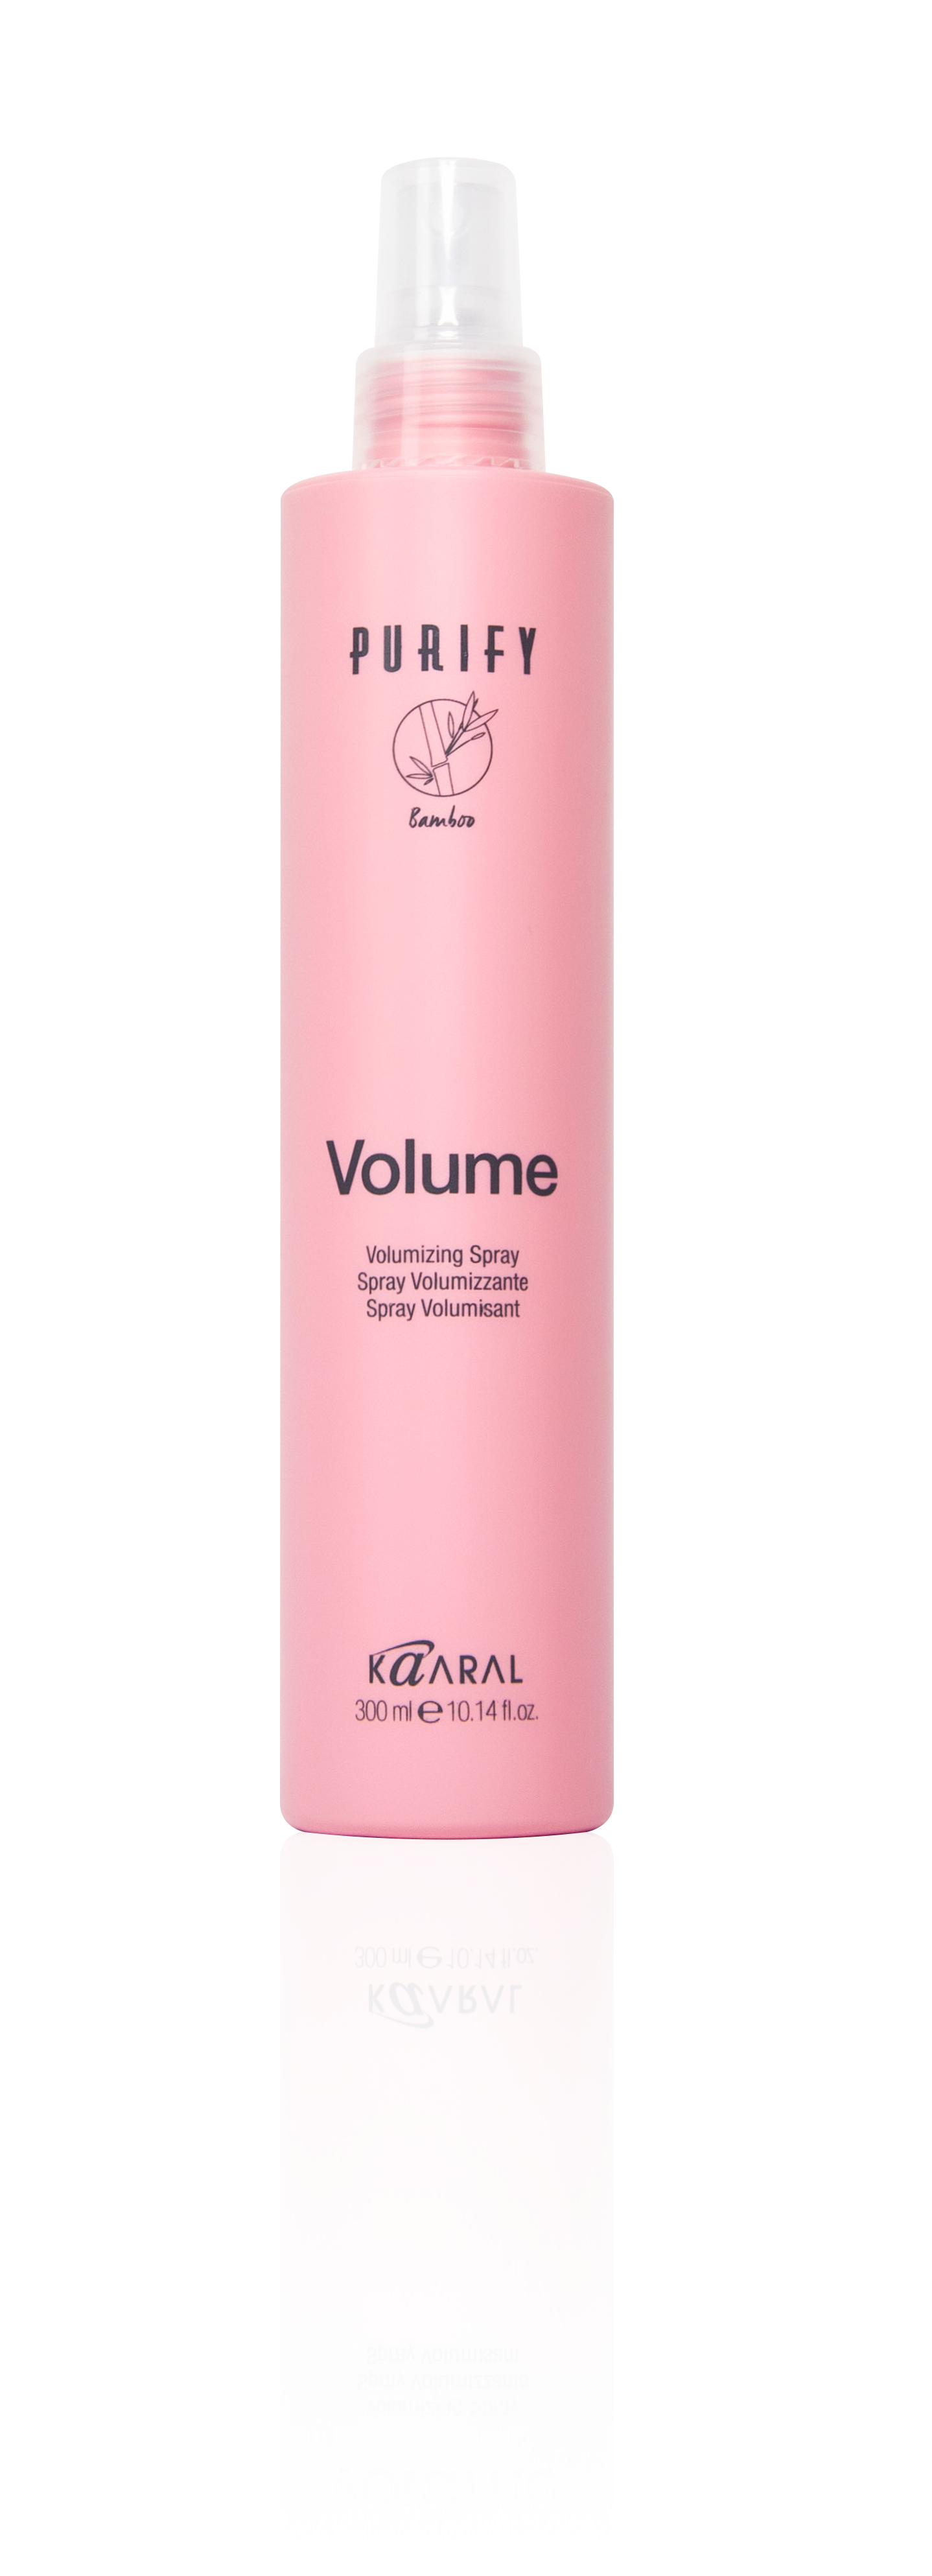 PURIFY Volume Spray by KAARAL